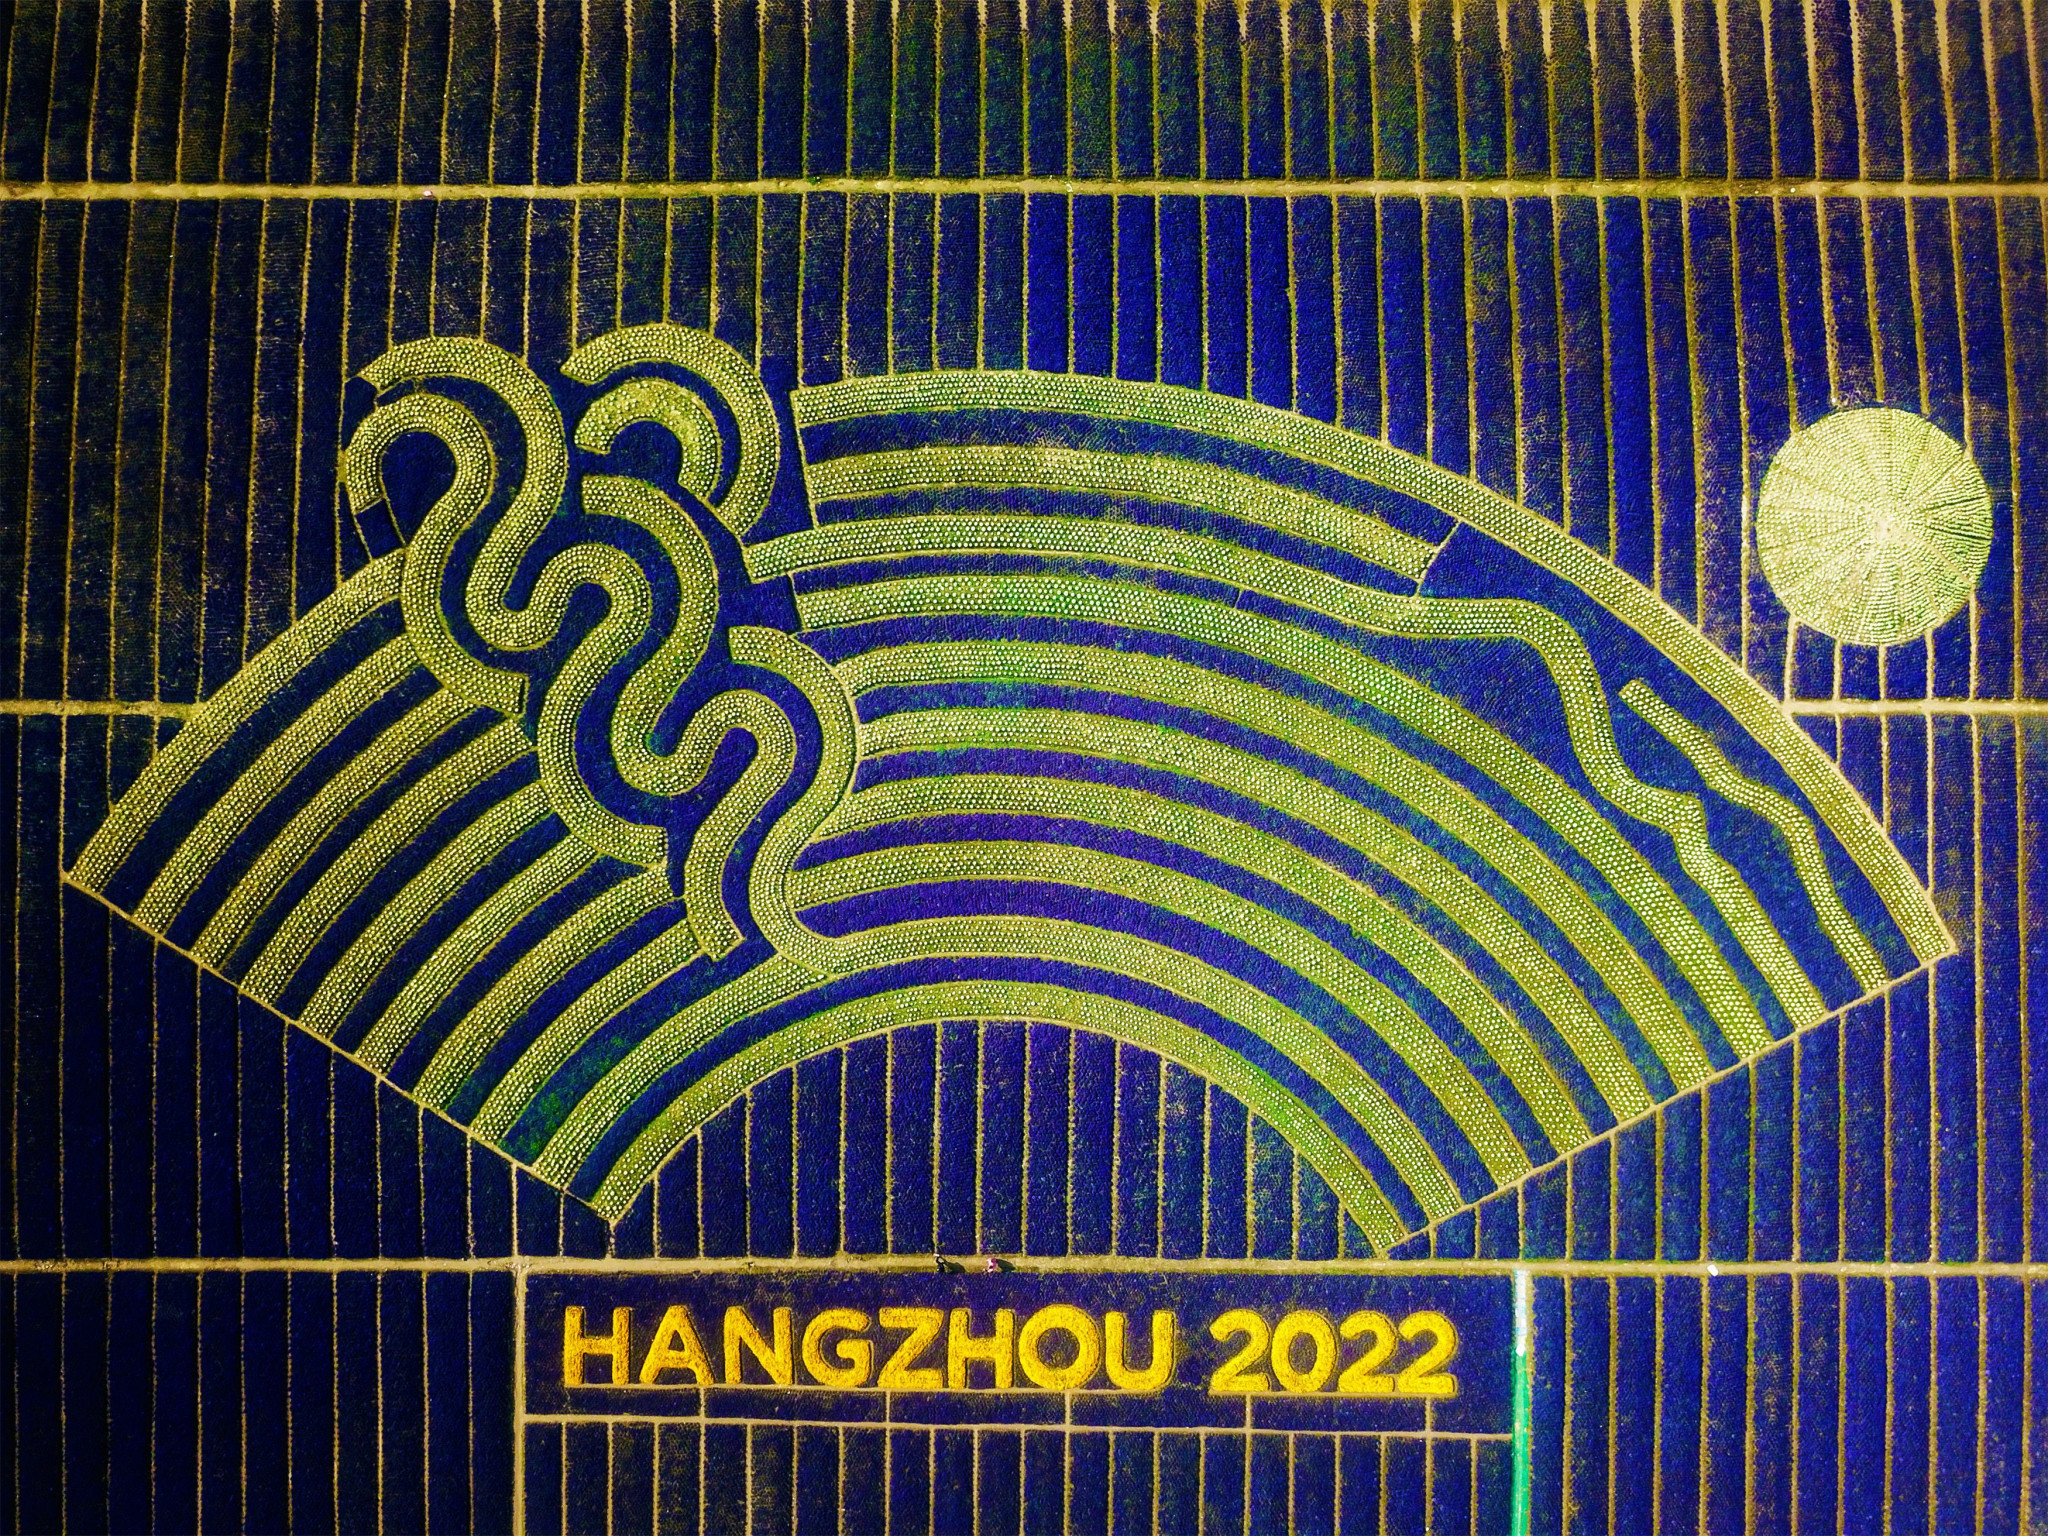 Hangzhou 2022 is building its sponsorship portfolio ©Getty Images